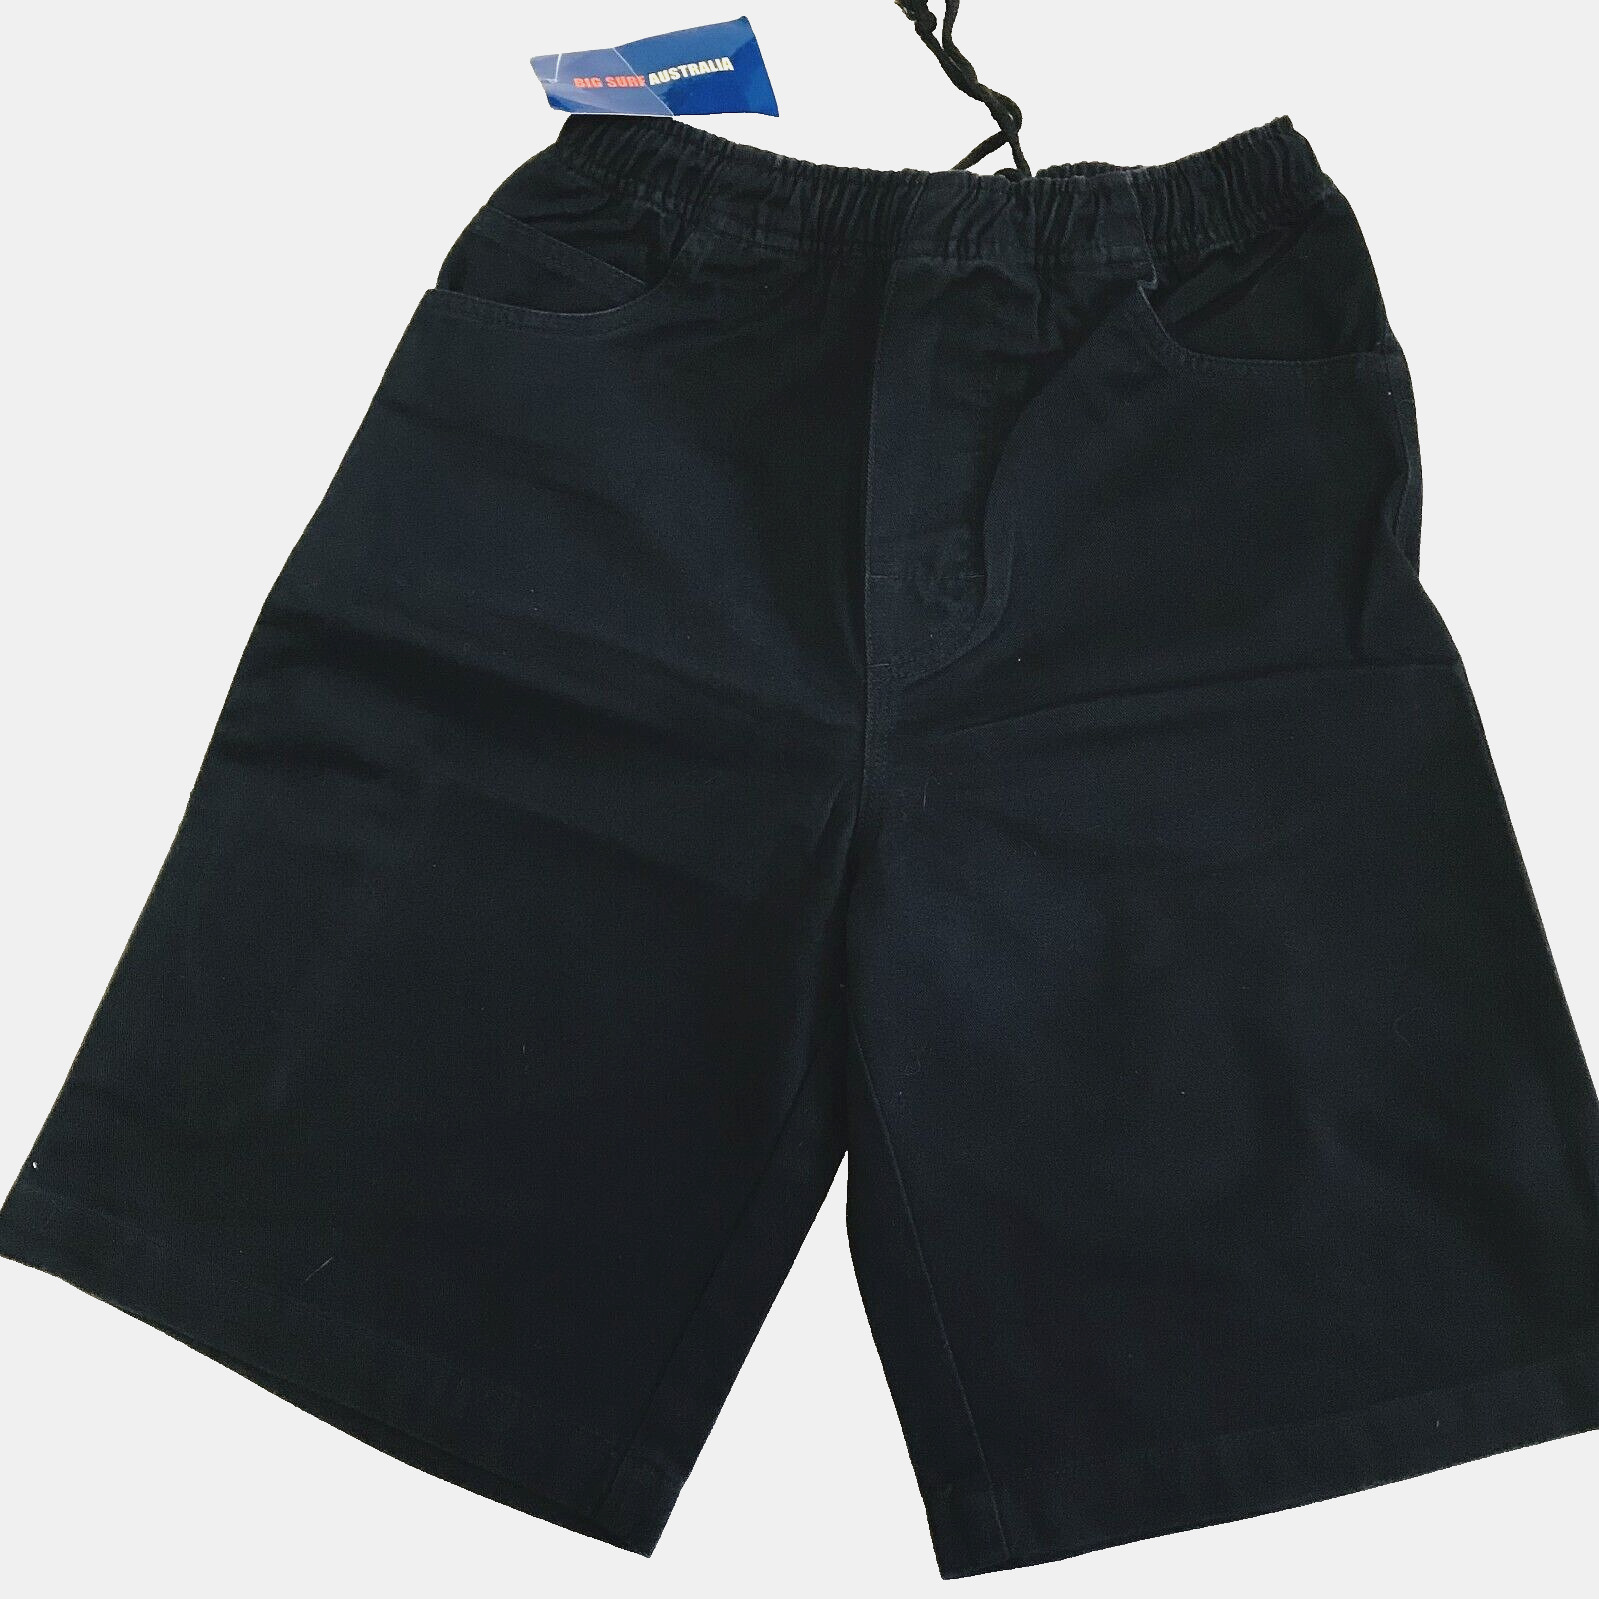 "Big Surf Australia" Clothing Women's Cargo Shorts 6 Pockets - Navy Size 10